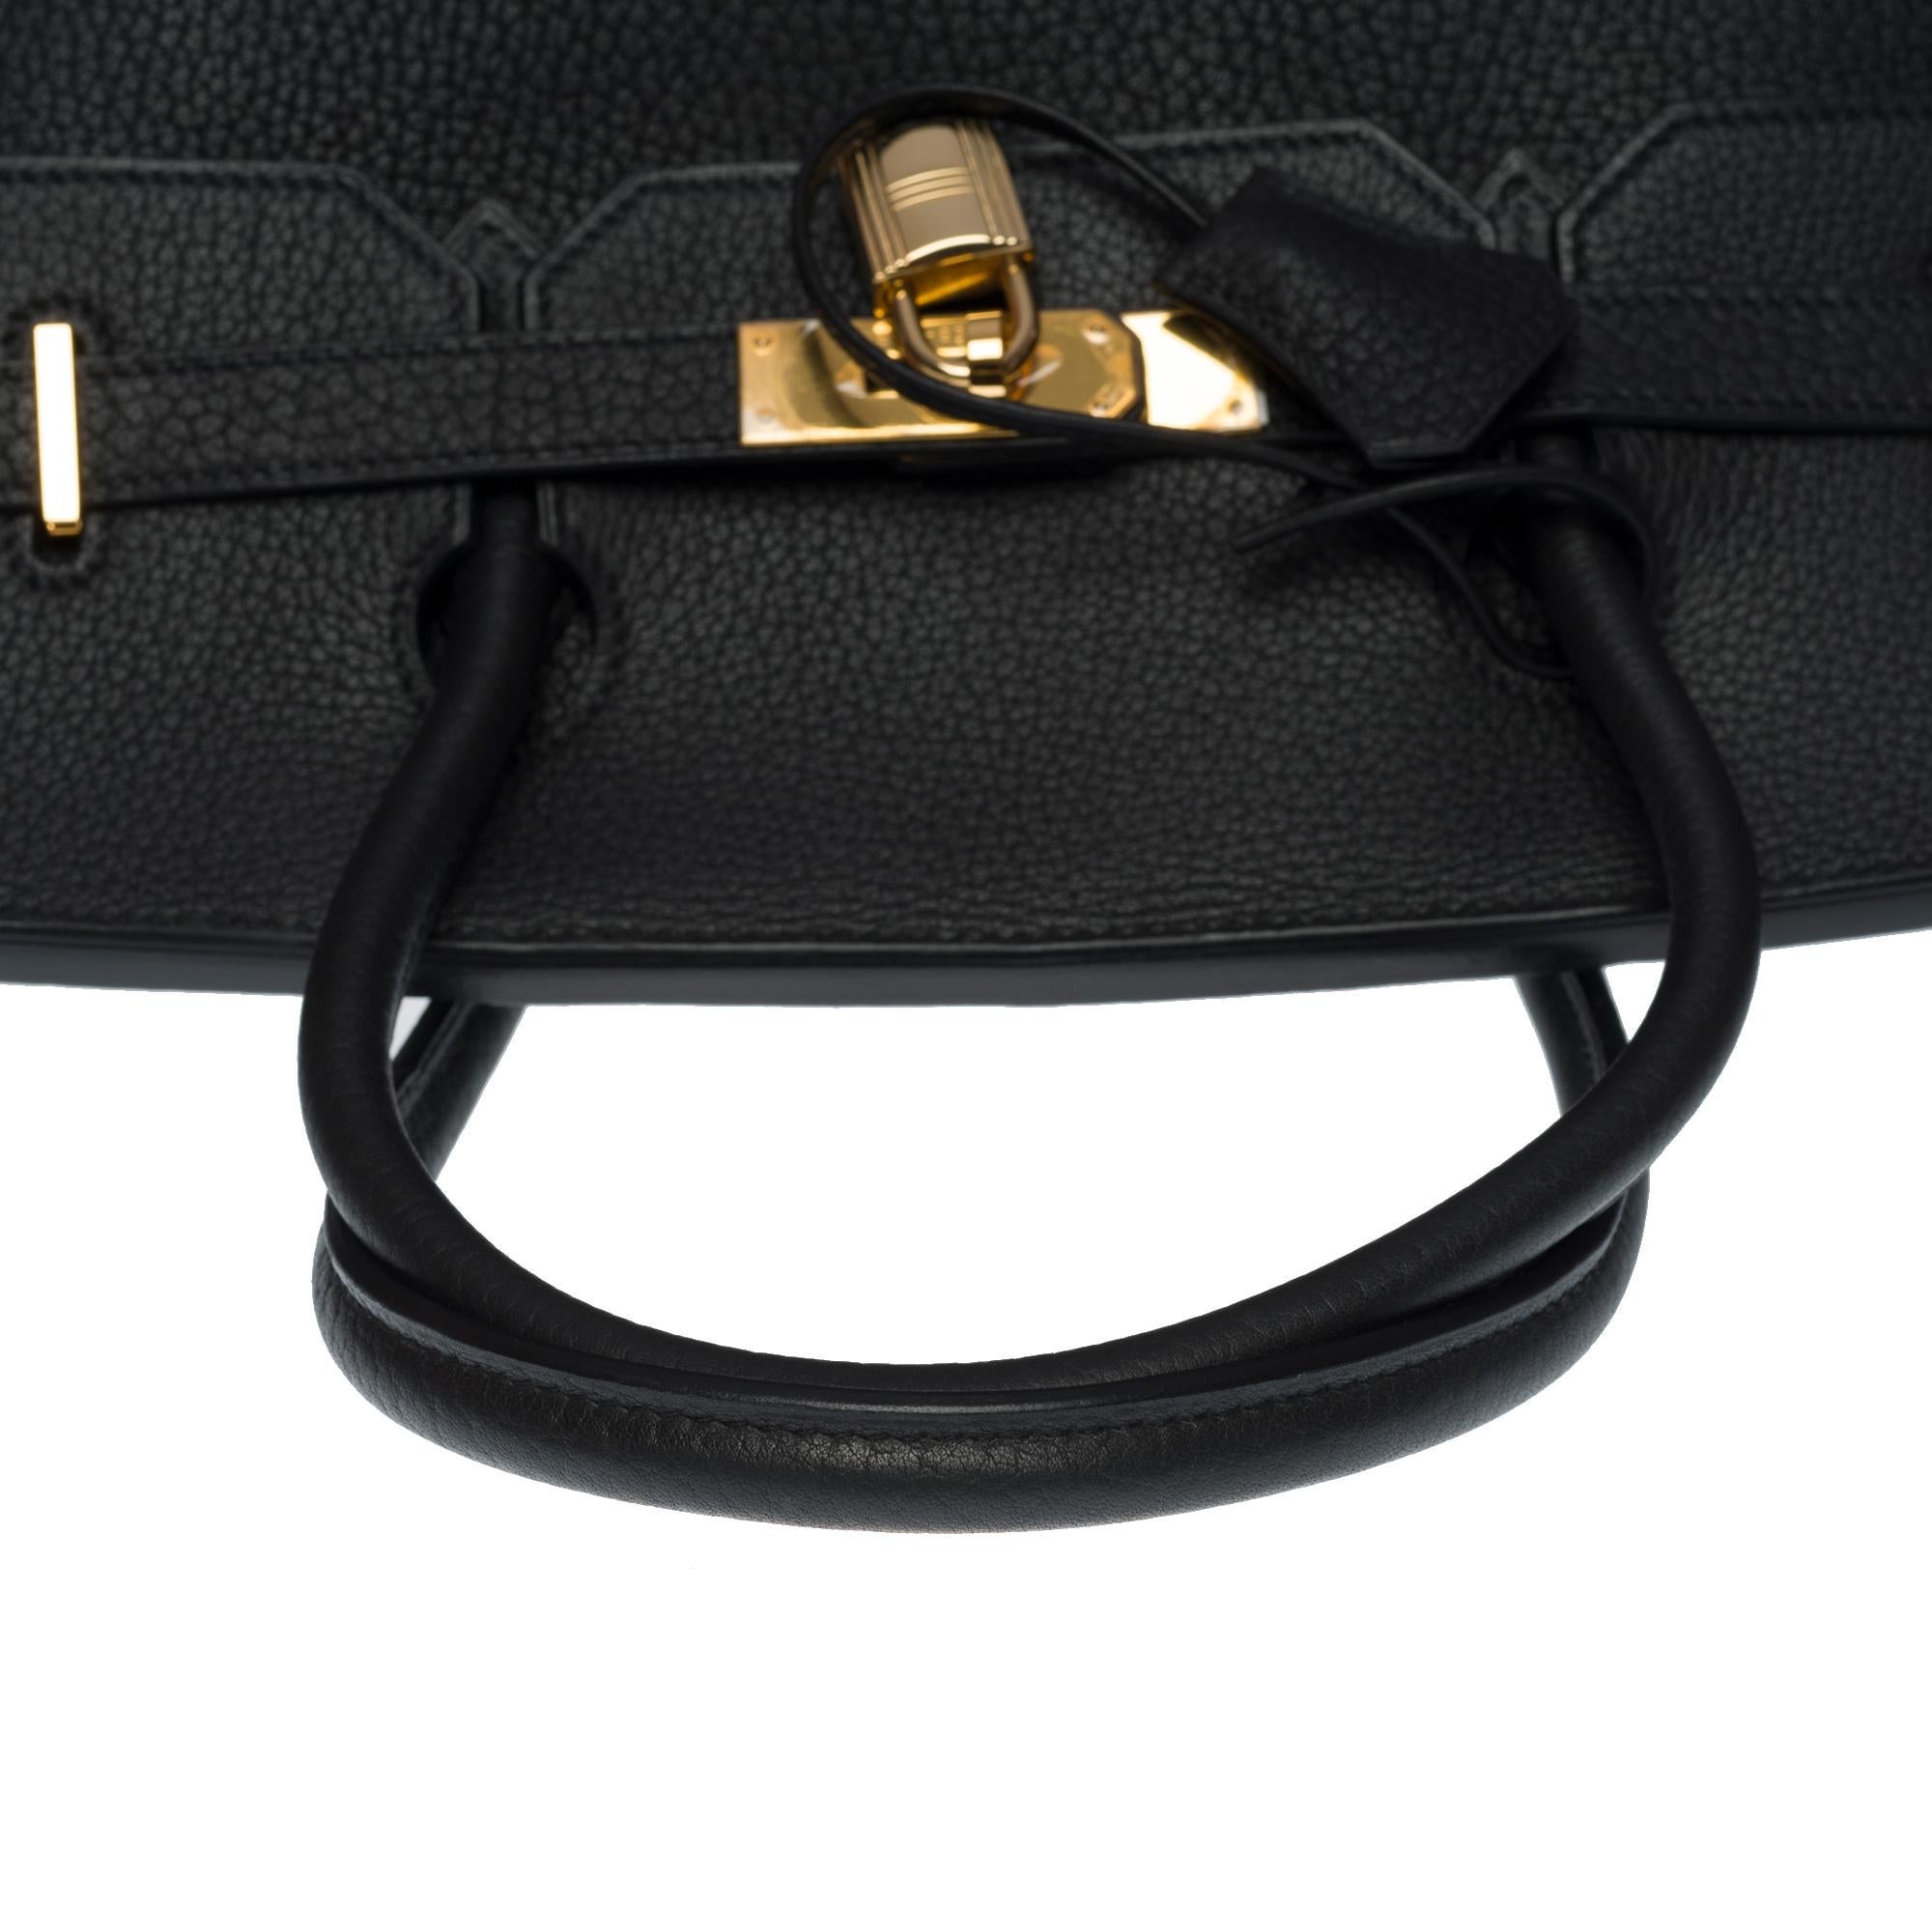 Stunning Hermes Birkin 40cm handbag in Black Togo leather, GHW 5